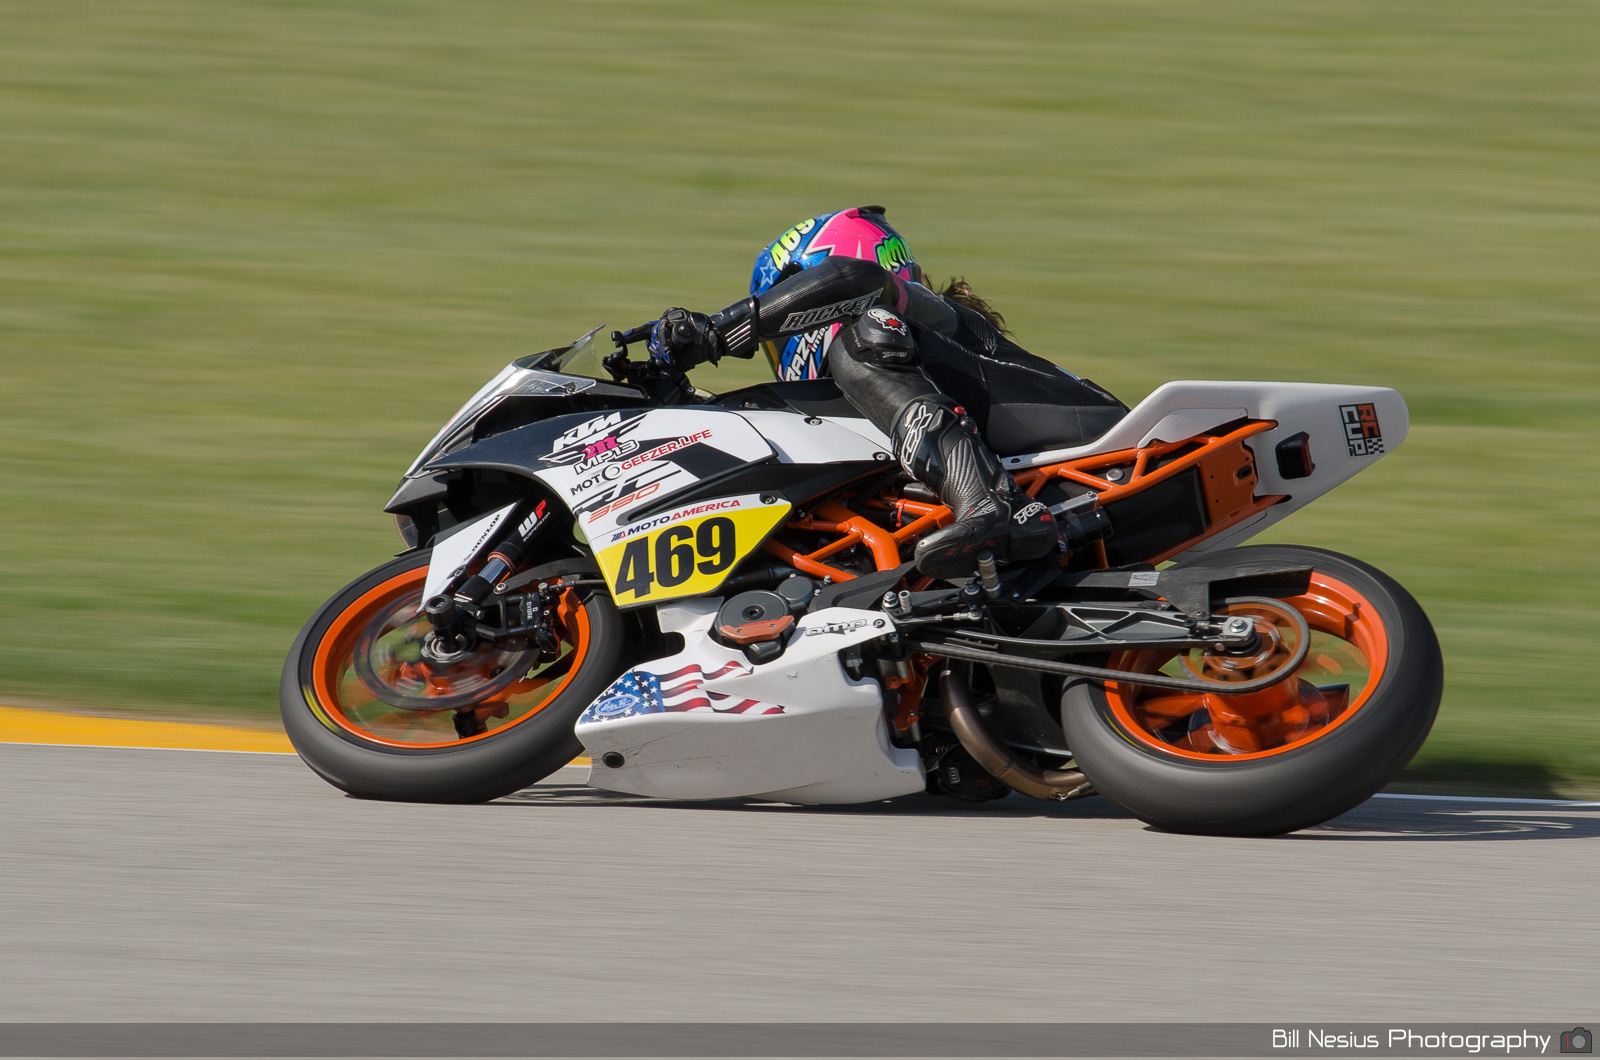 Jamie Astudillo on the #469 KTM RC390 MP13 Racing / DSC_2984 / 4